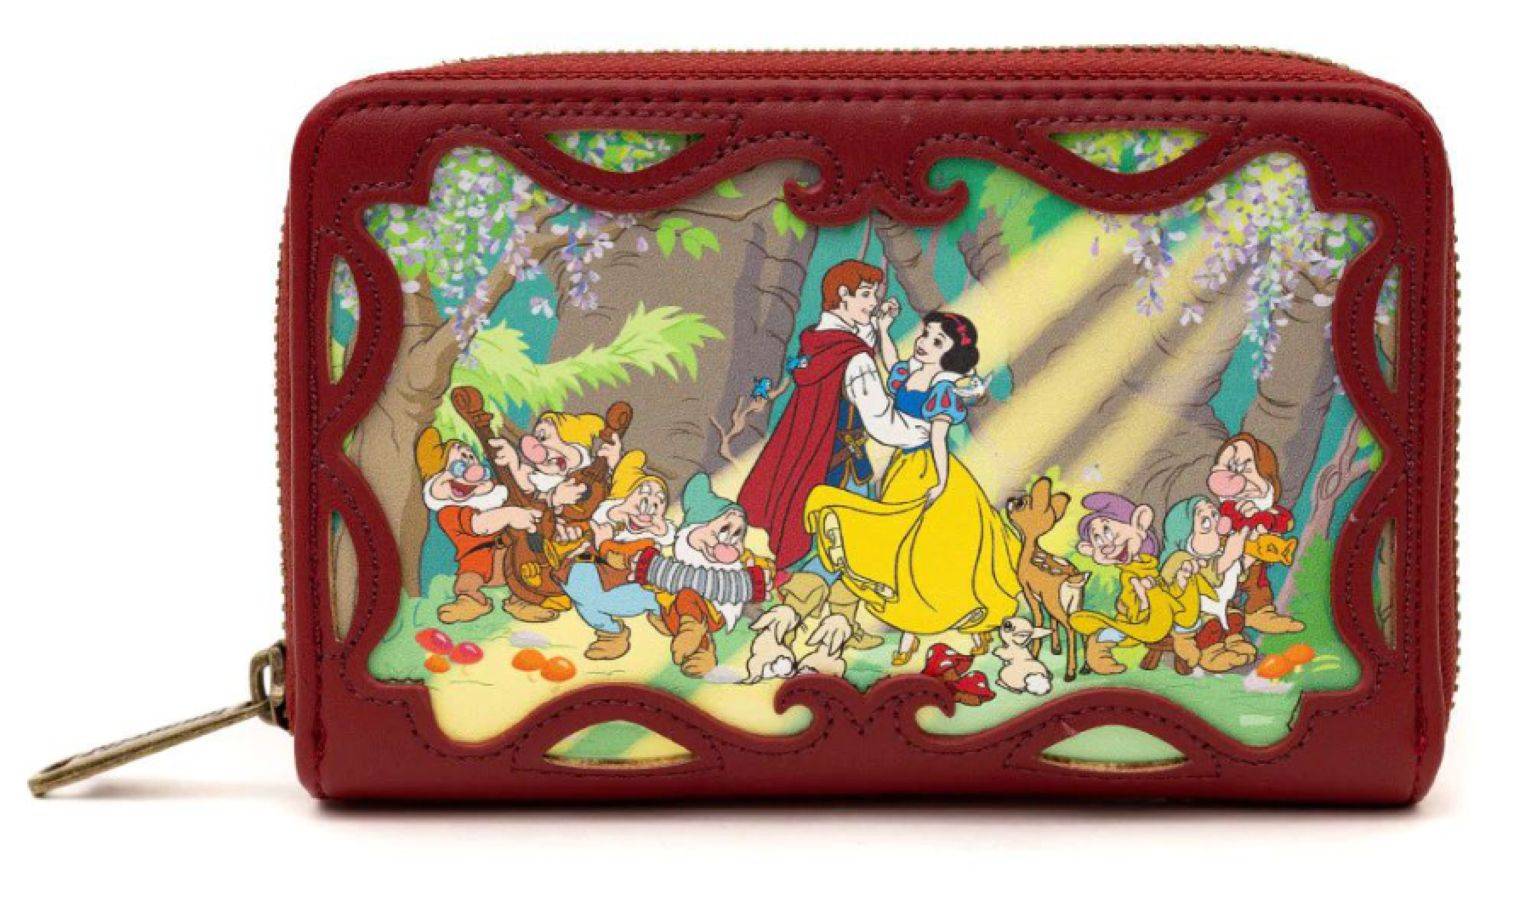 Disney Princess - Stories Snow White and the Seven Dwarfs US Exclusive Purse